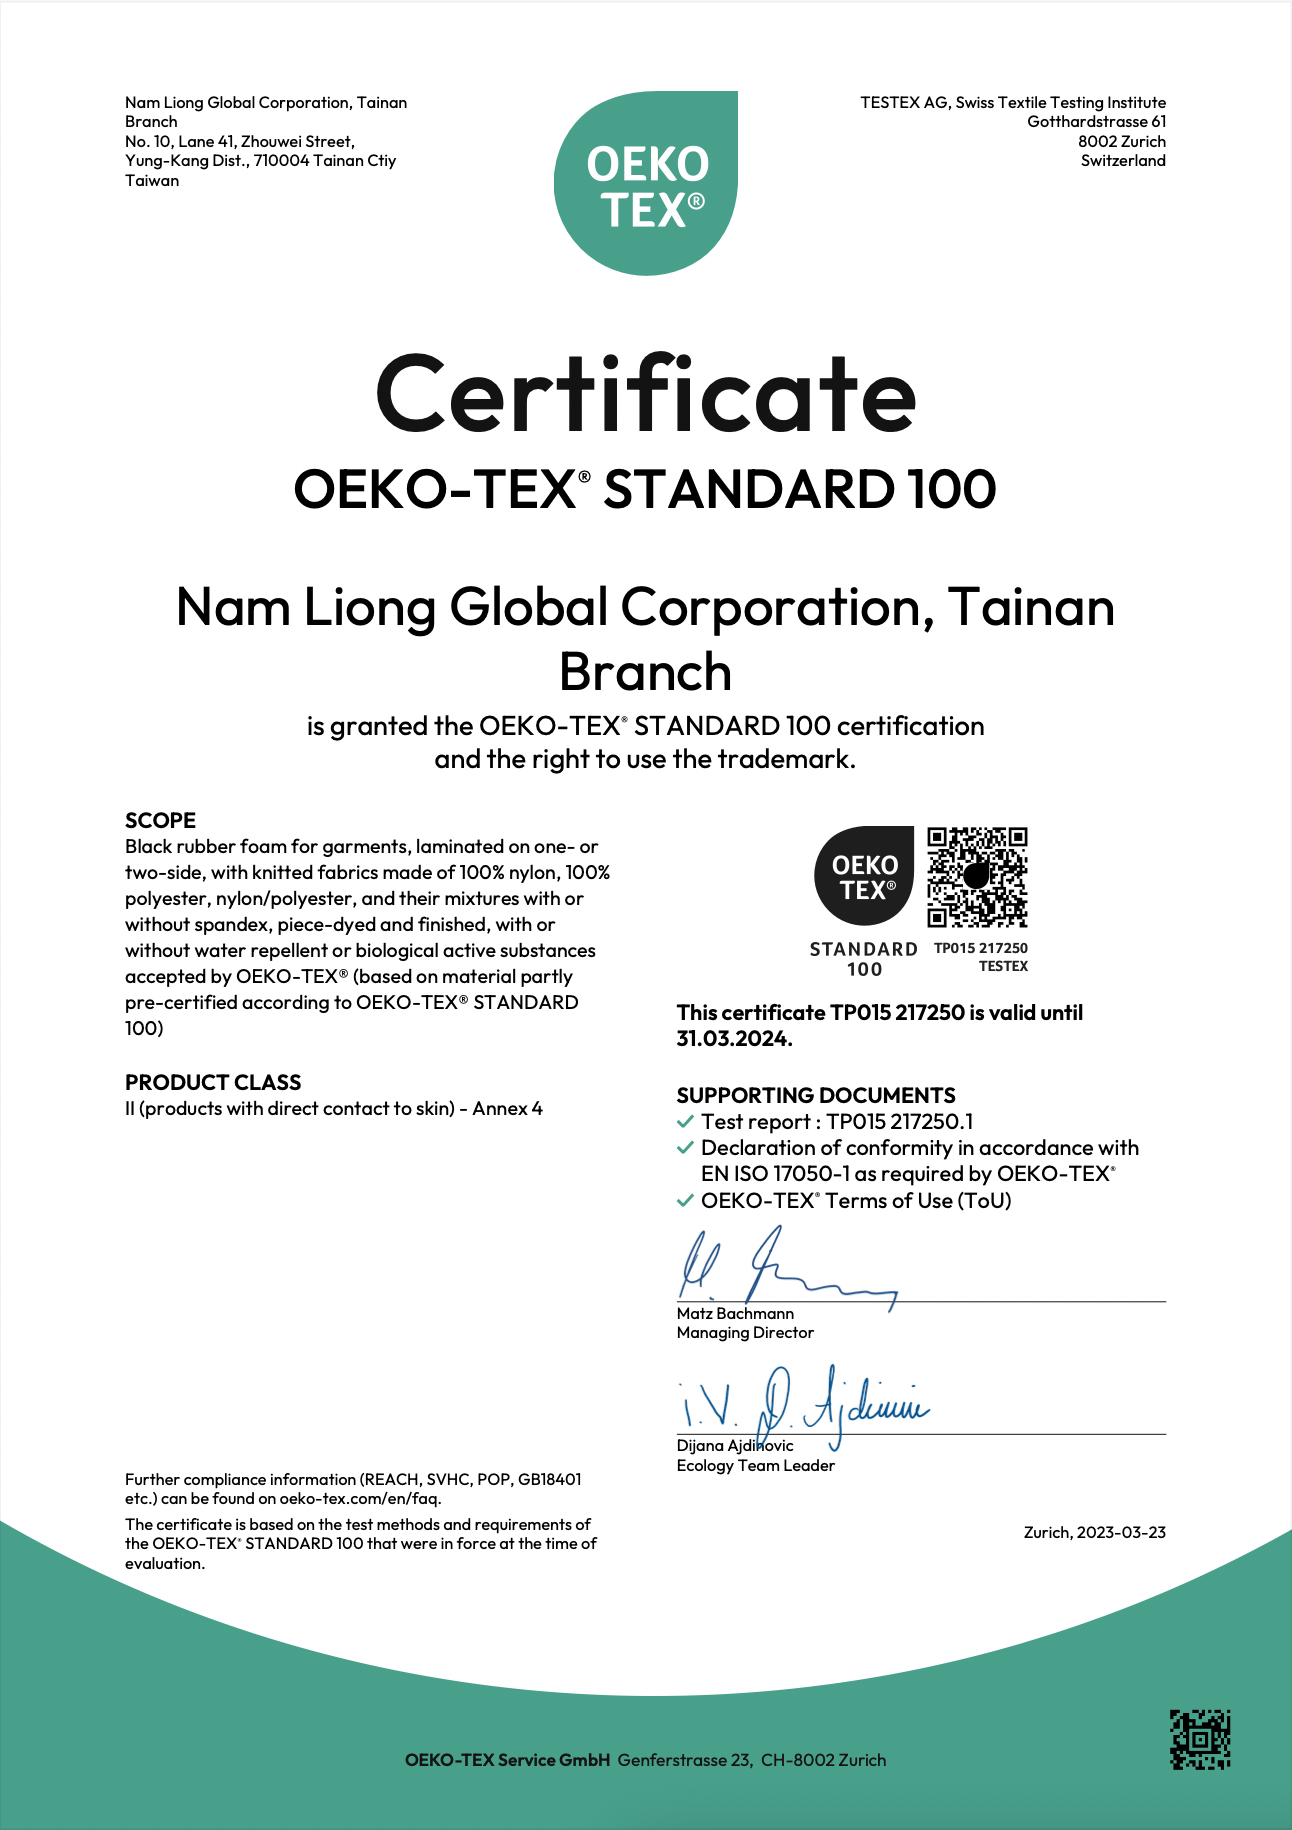 Сертификация Oeko-Tex Standard 100® пройдена